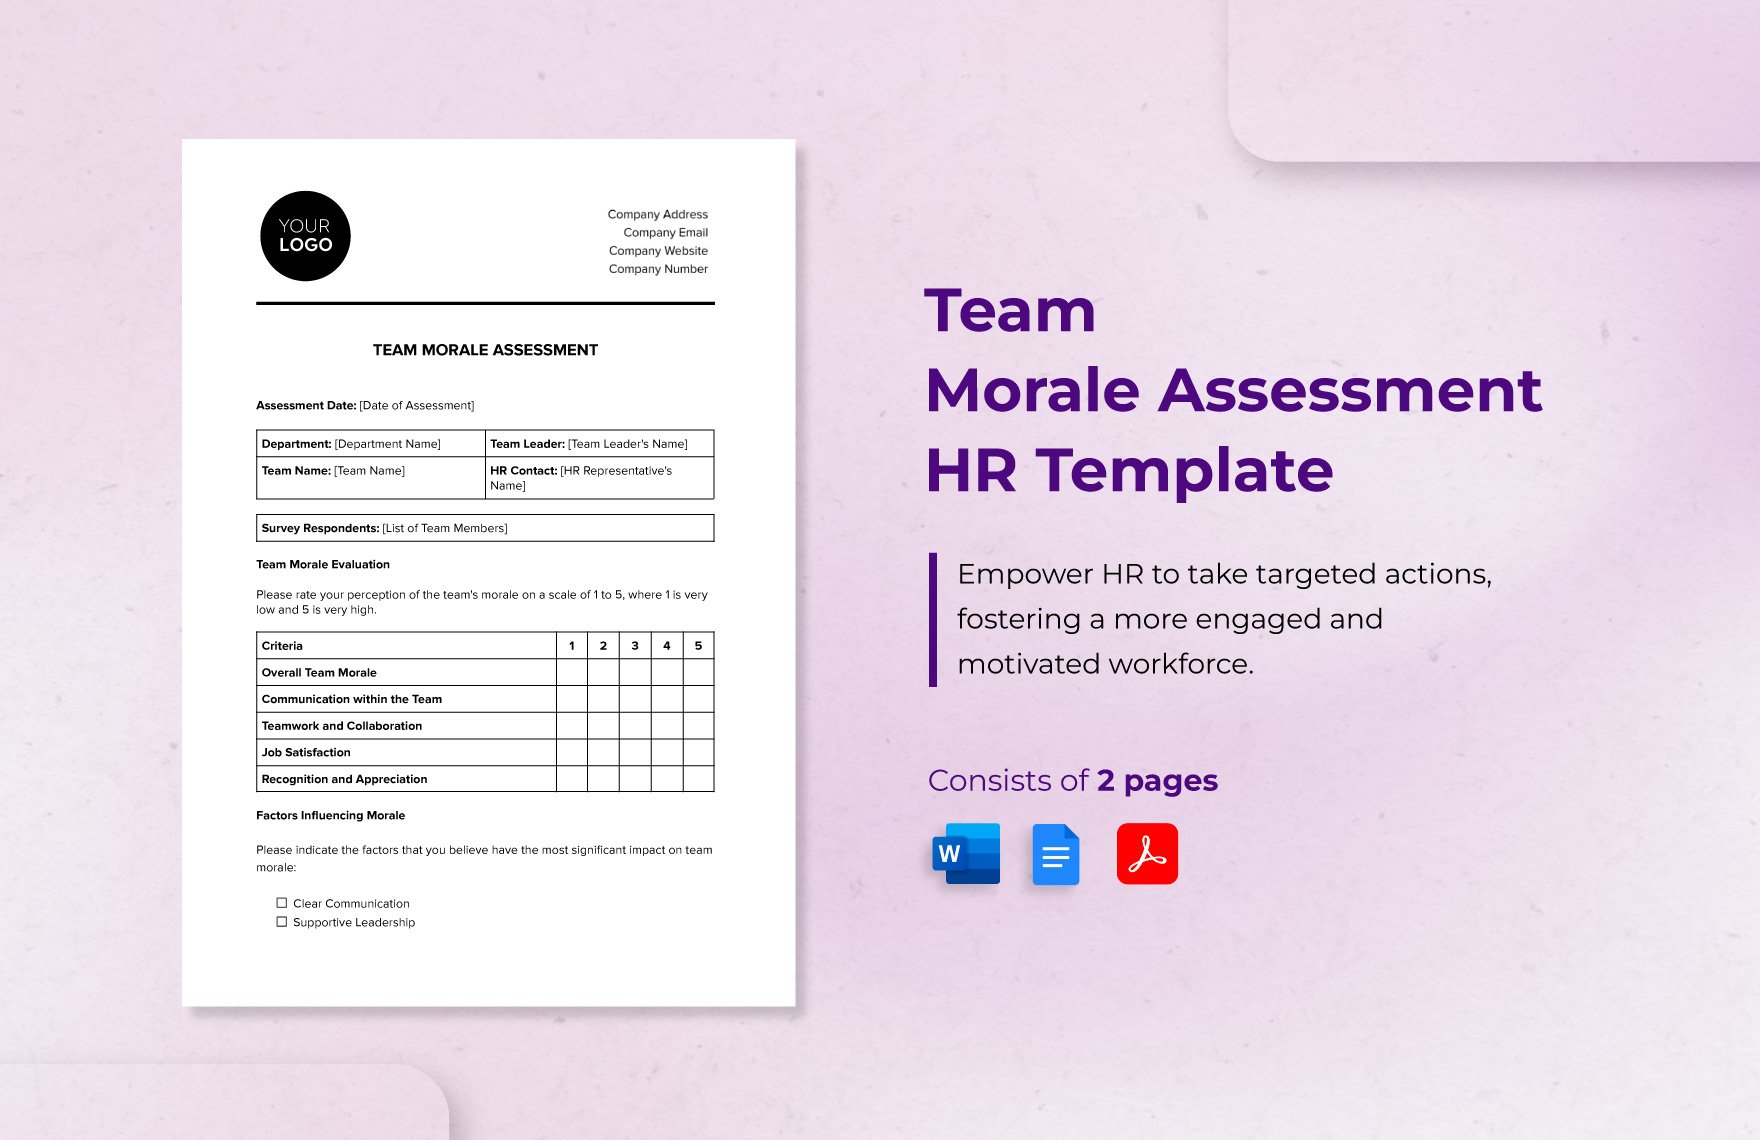 Team Morale Assessment HR Template